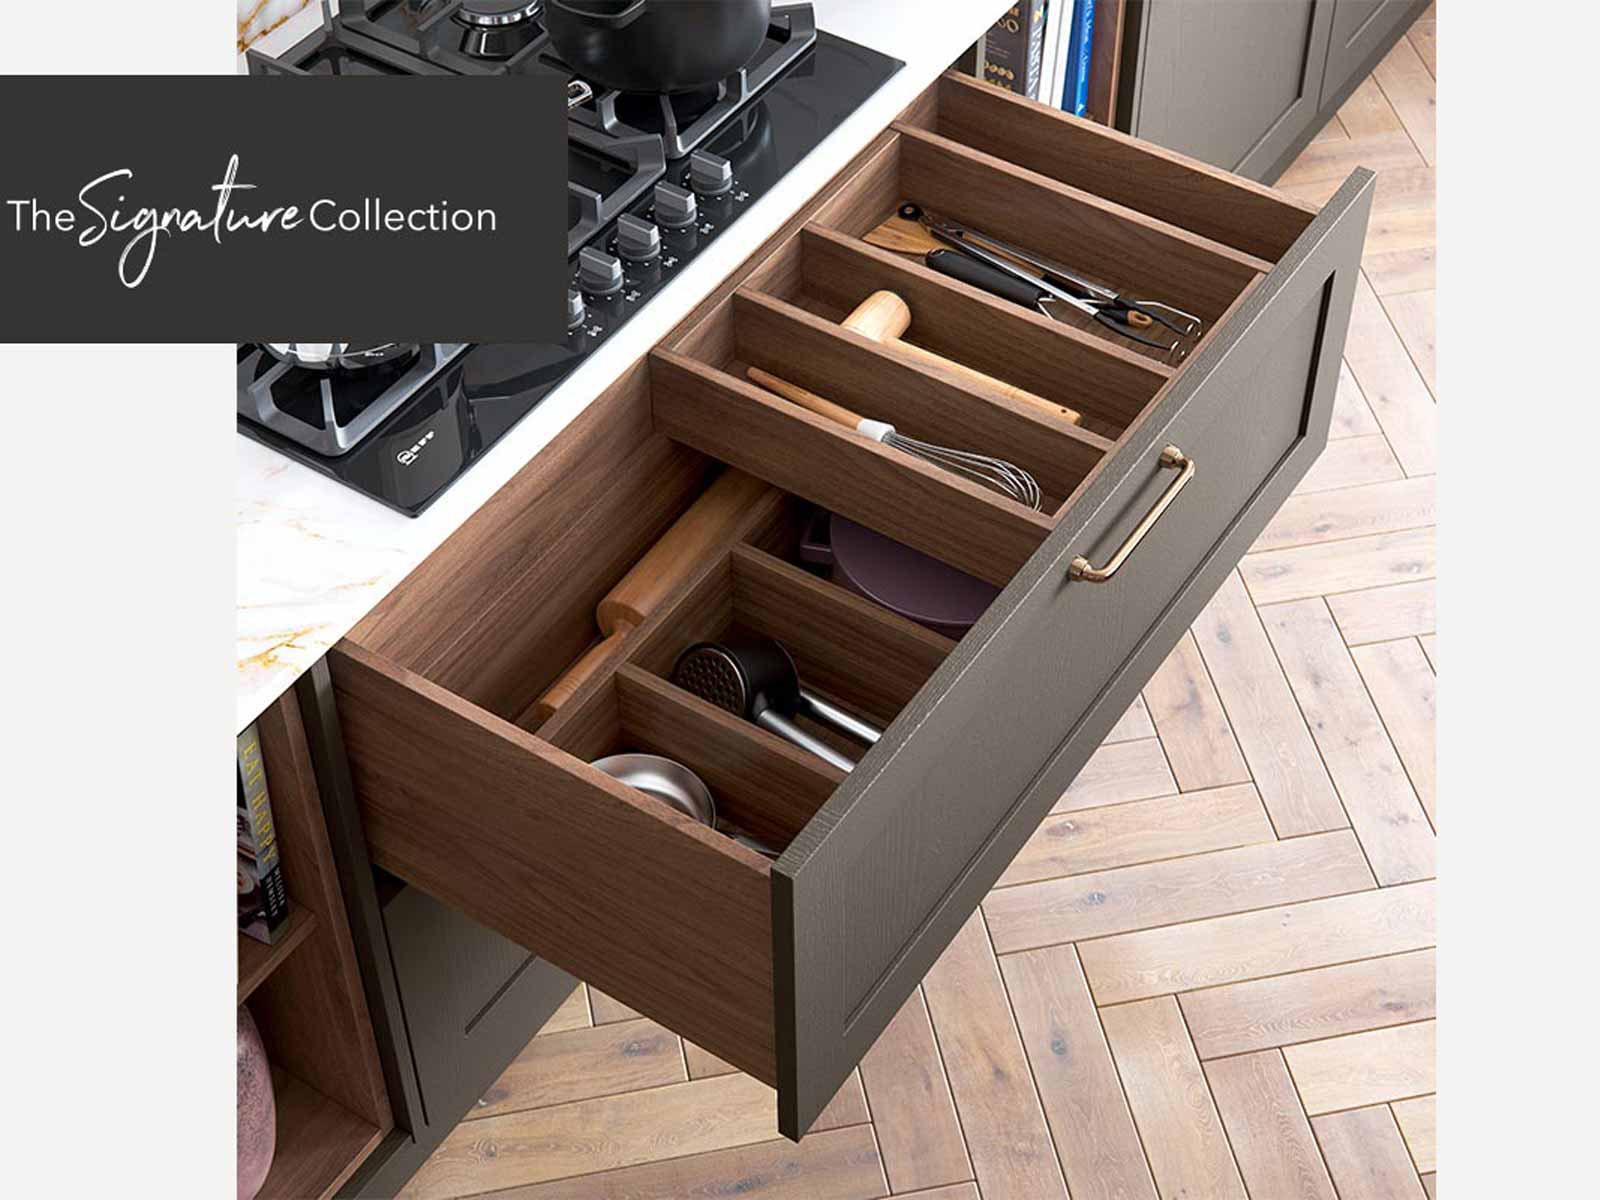 Open full-wood kitchen drawer under hobs